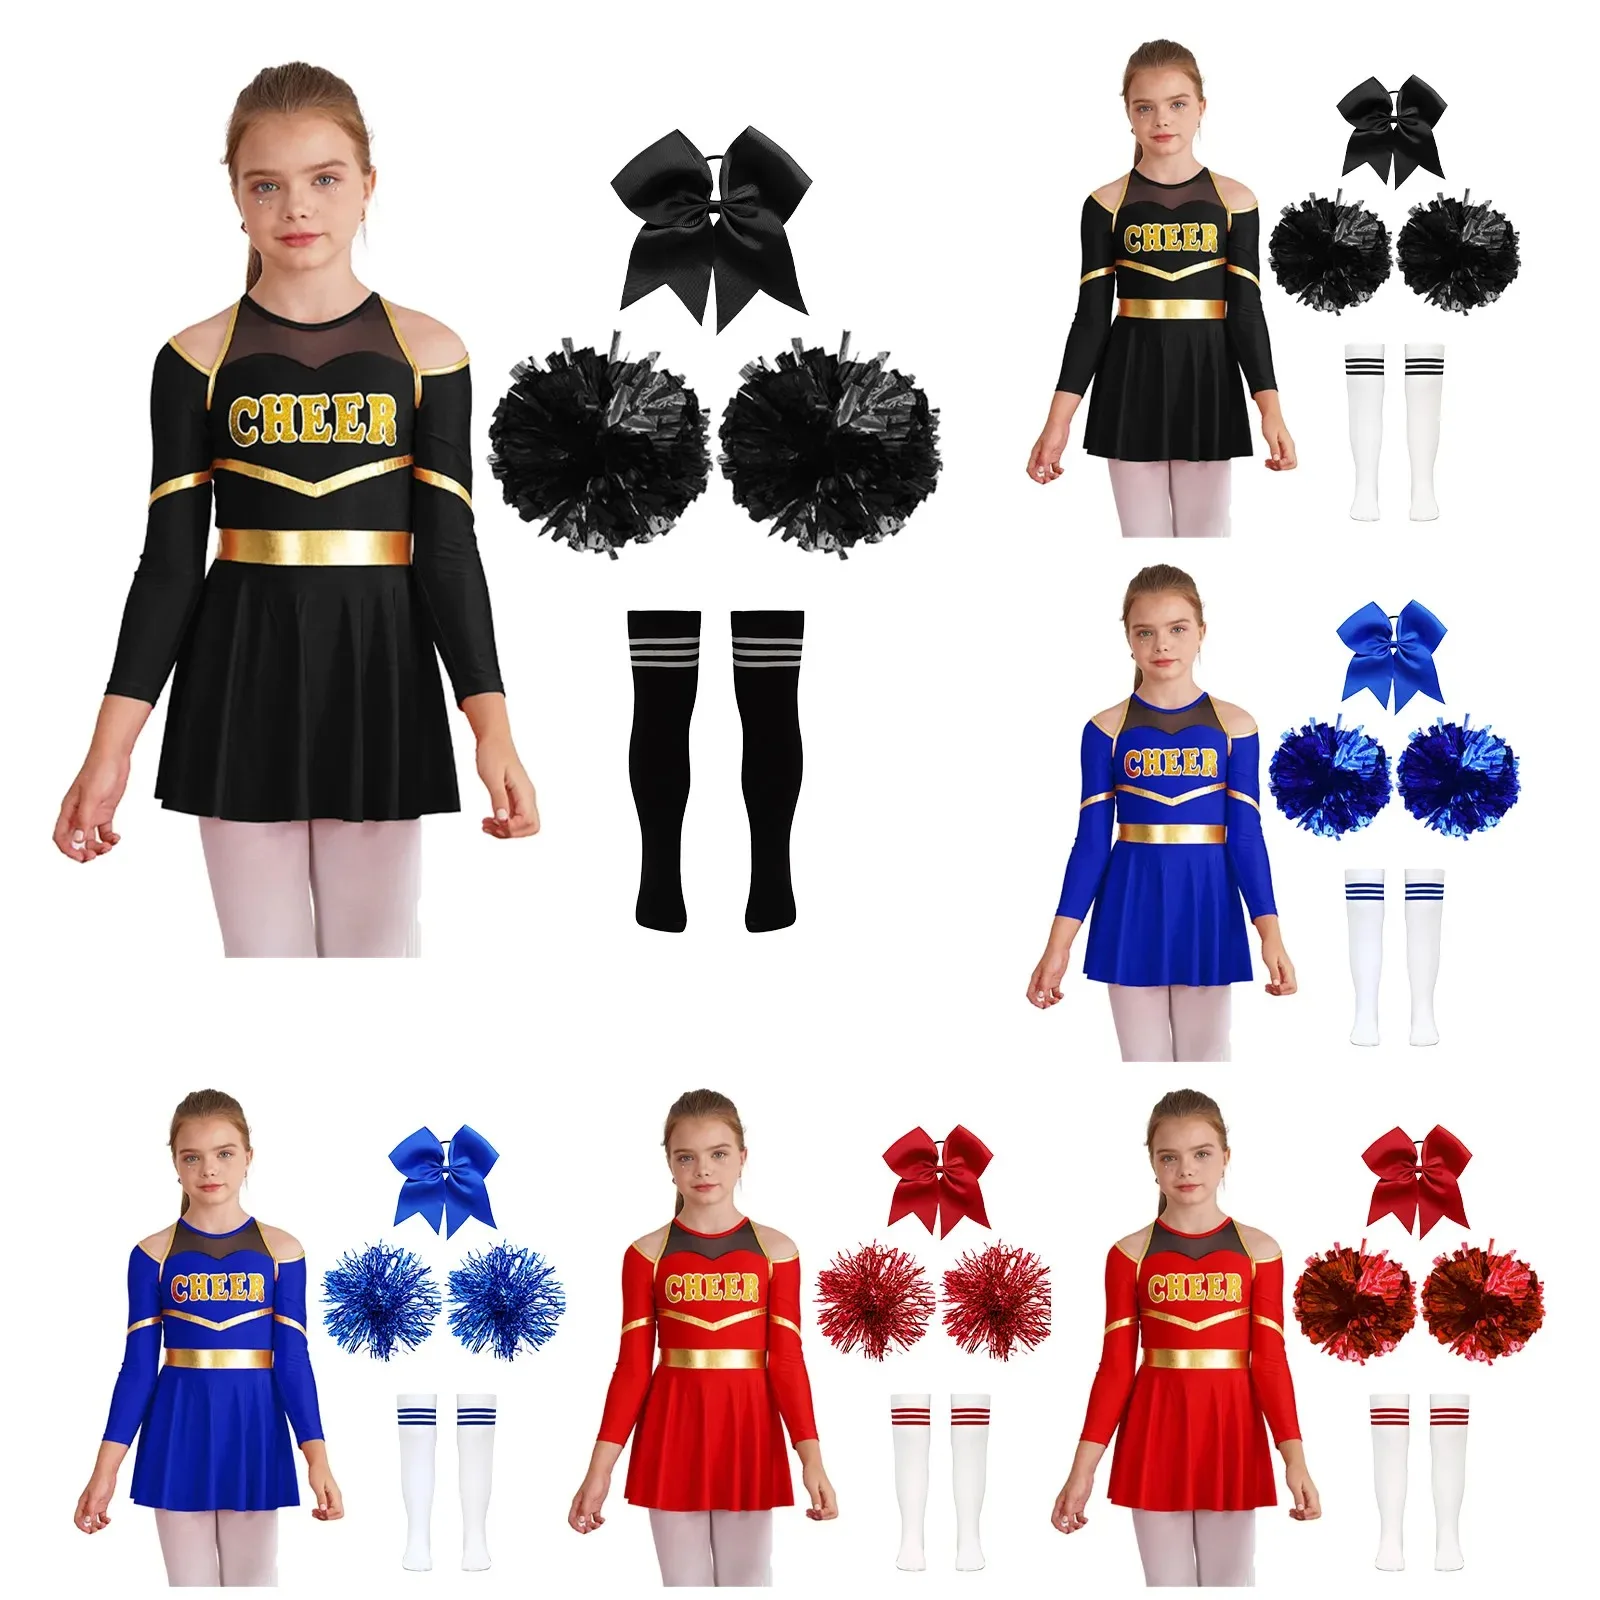 Kids Girls Halloween Cosplay Cheerleader Costume Long Sleeve Cheerleading Dance Dress Uniform Carnival Theme Party Fancy Dress